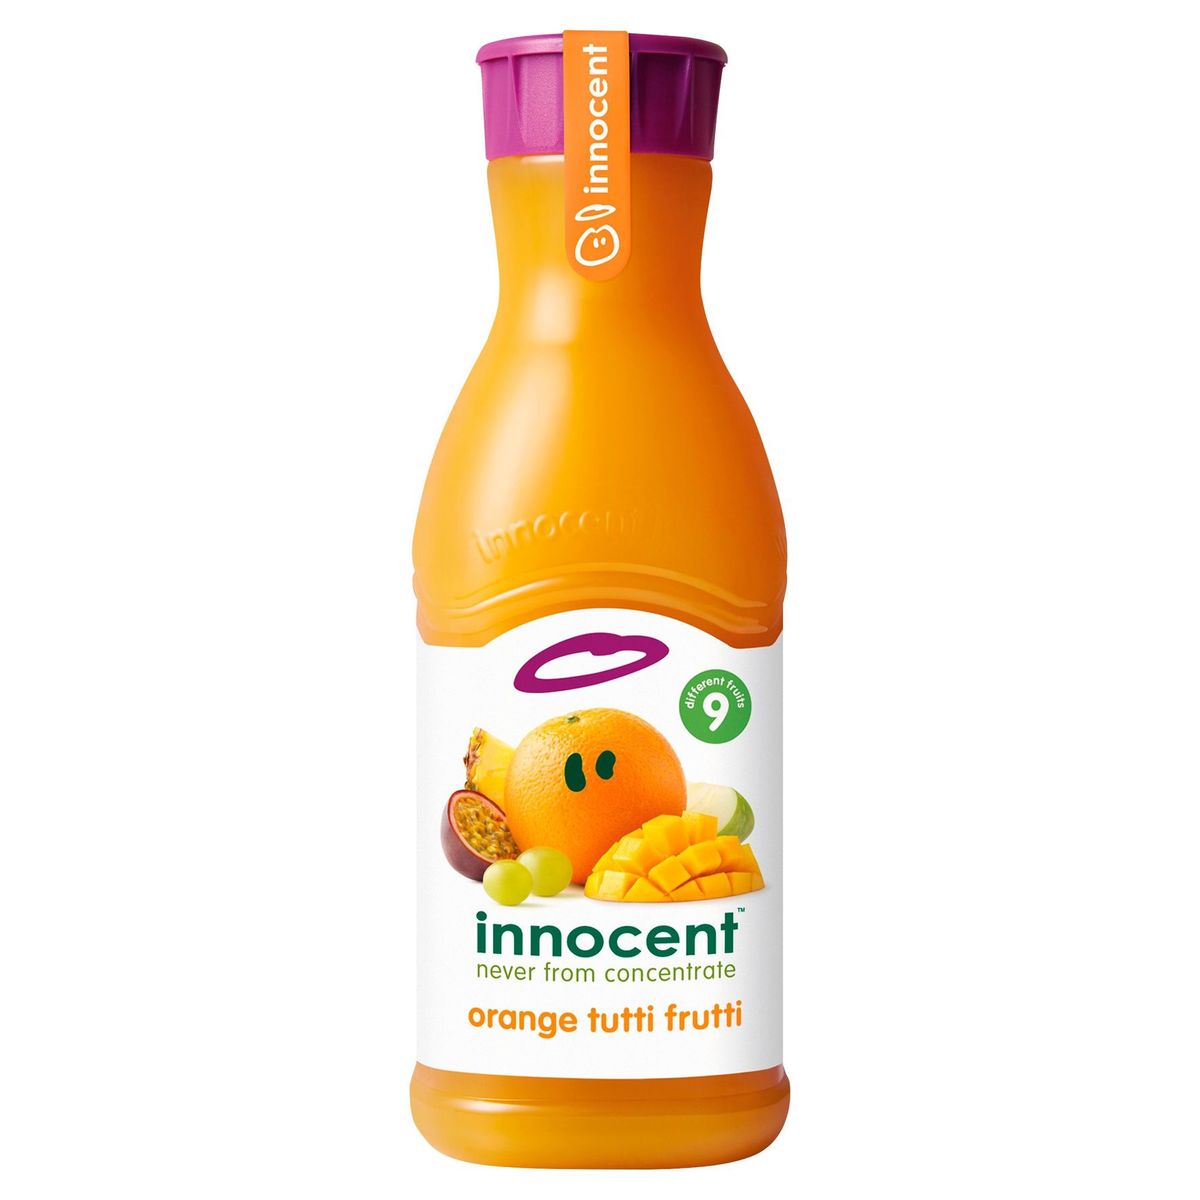 Innocent Orange Tutti Frutti 900 ml